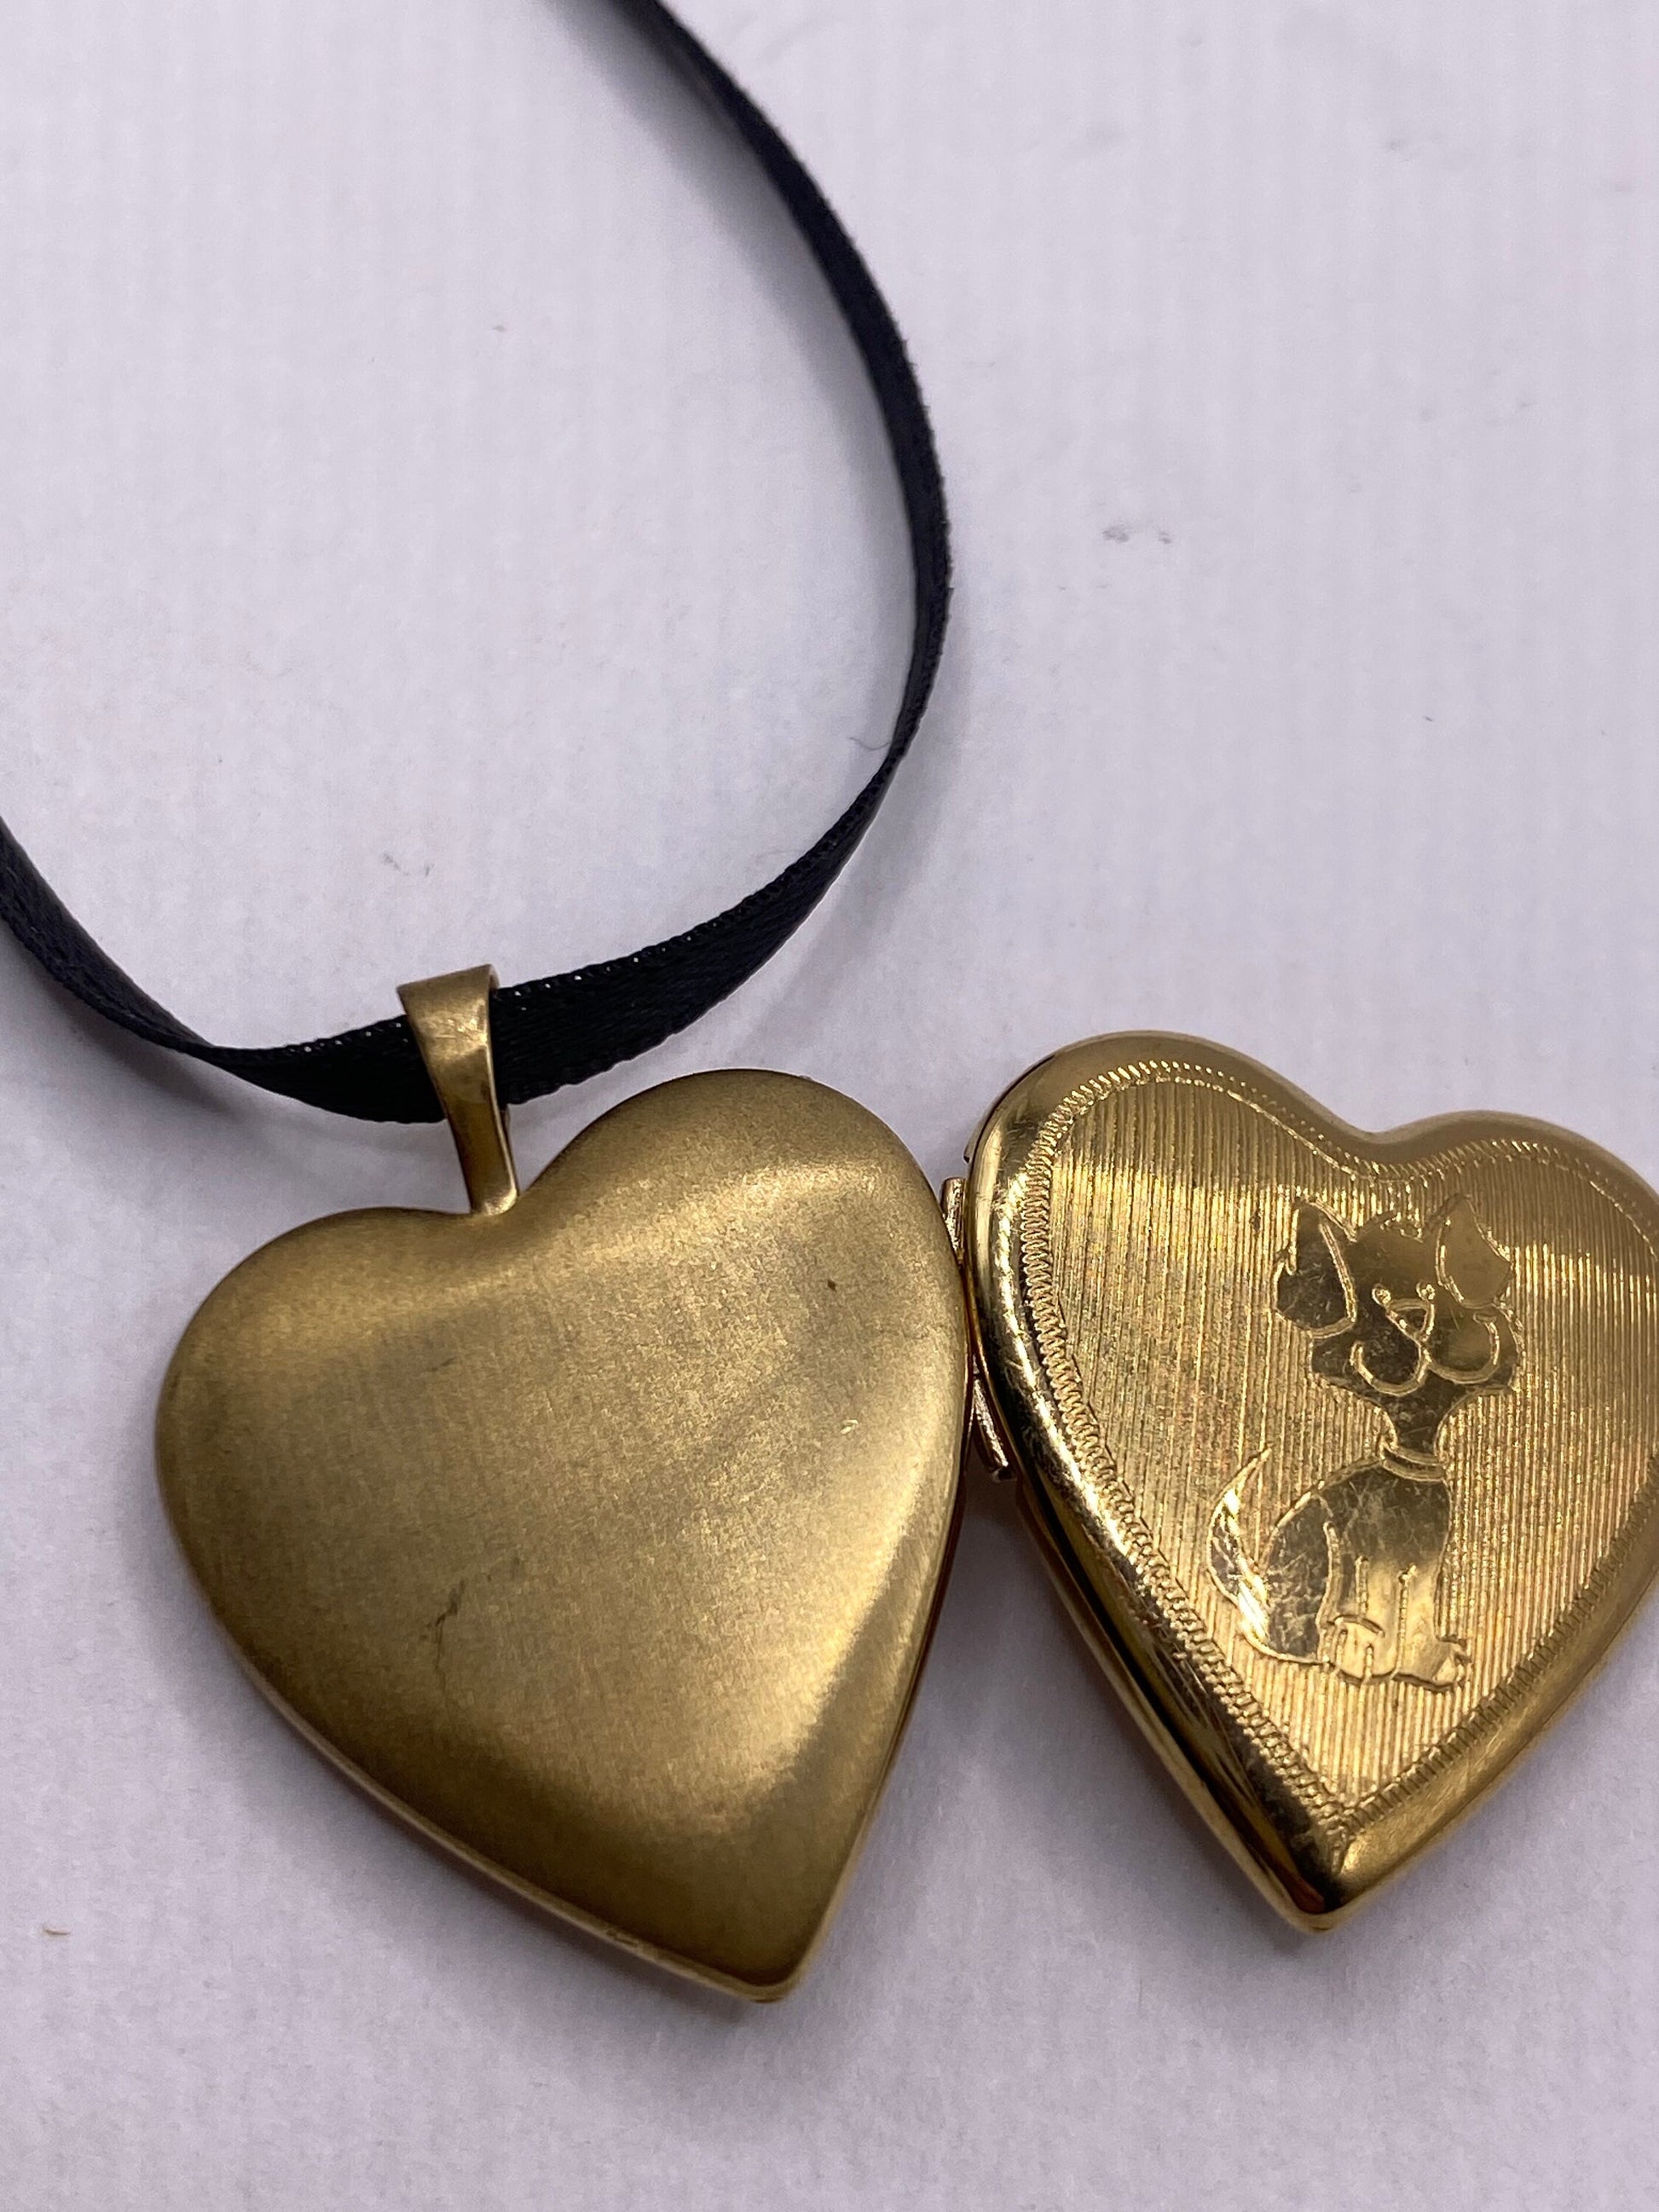 Vintage Gold Locket | Tiny Heart 9k Gold Filled Pendant Photo Memory Charm Engraved Angel Cherub | Choker Necklace